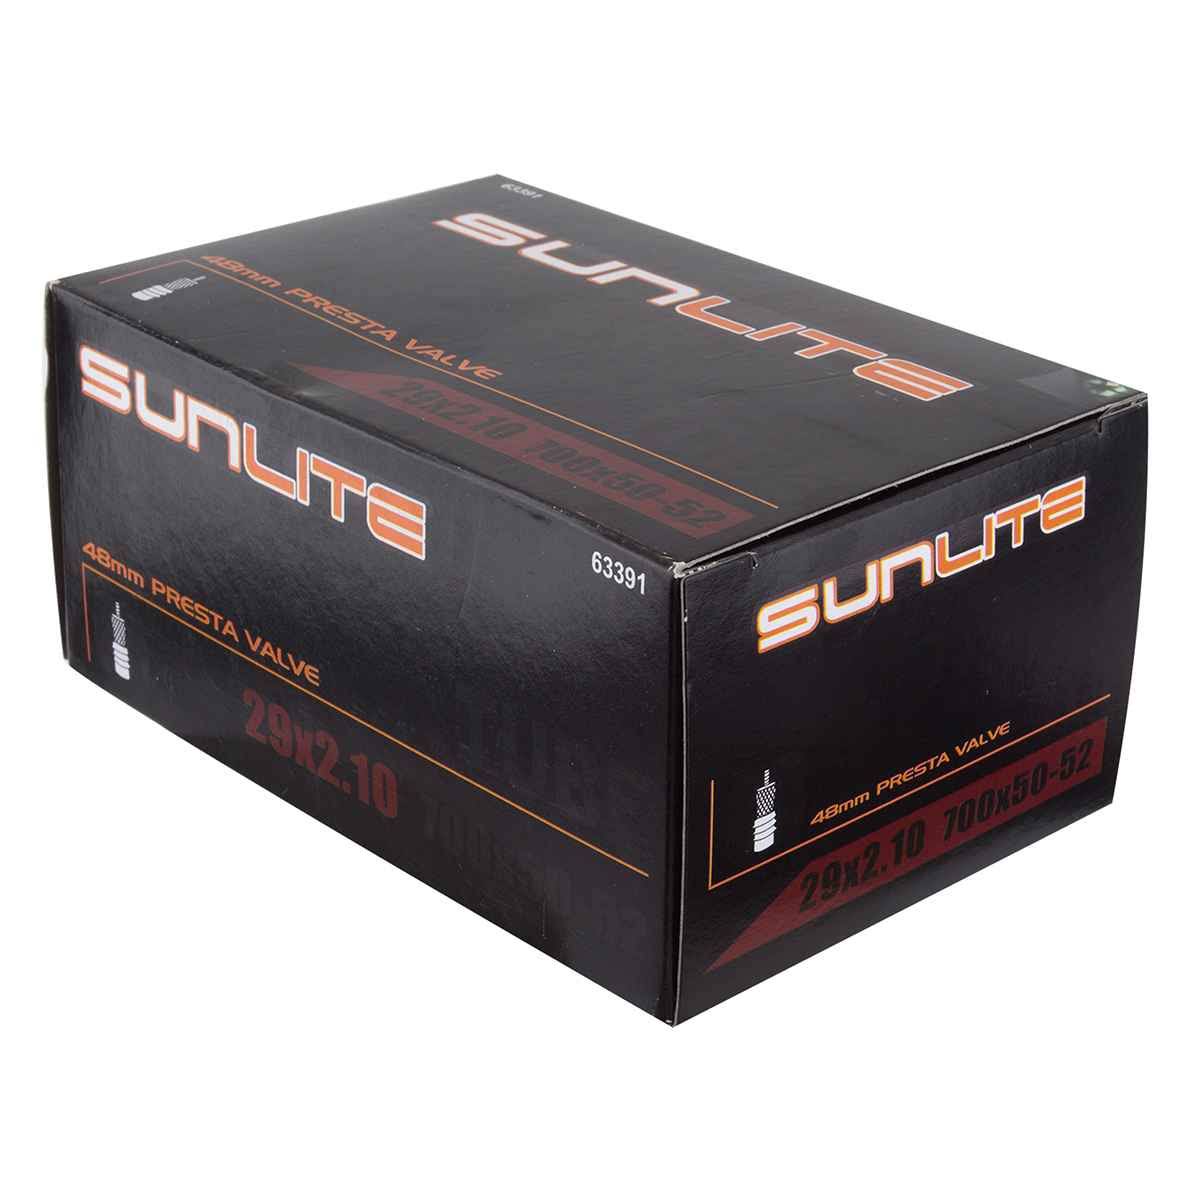 Sunlite Premium Bicycle Tube - Black, 48mm